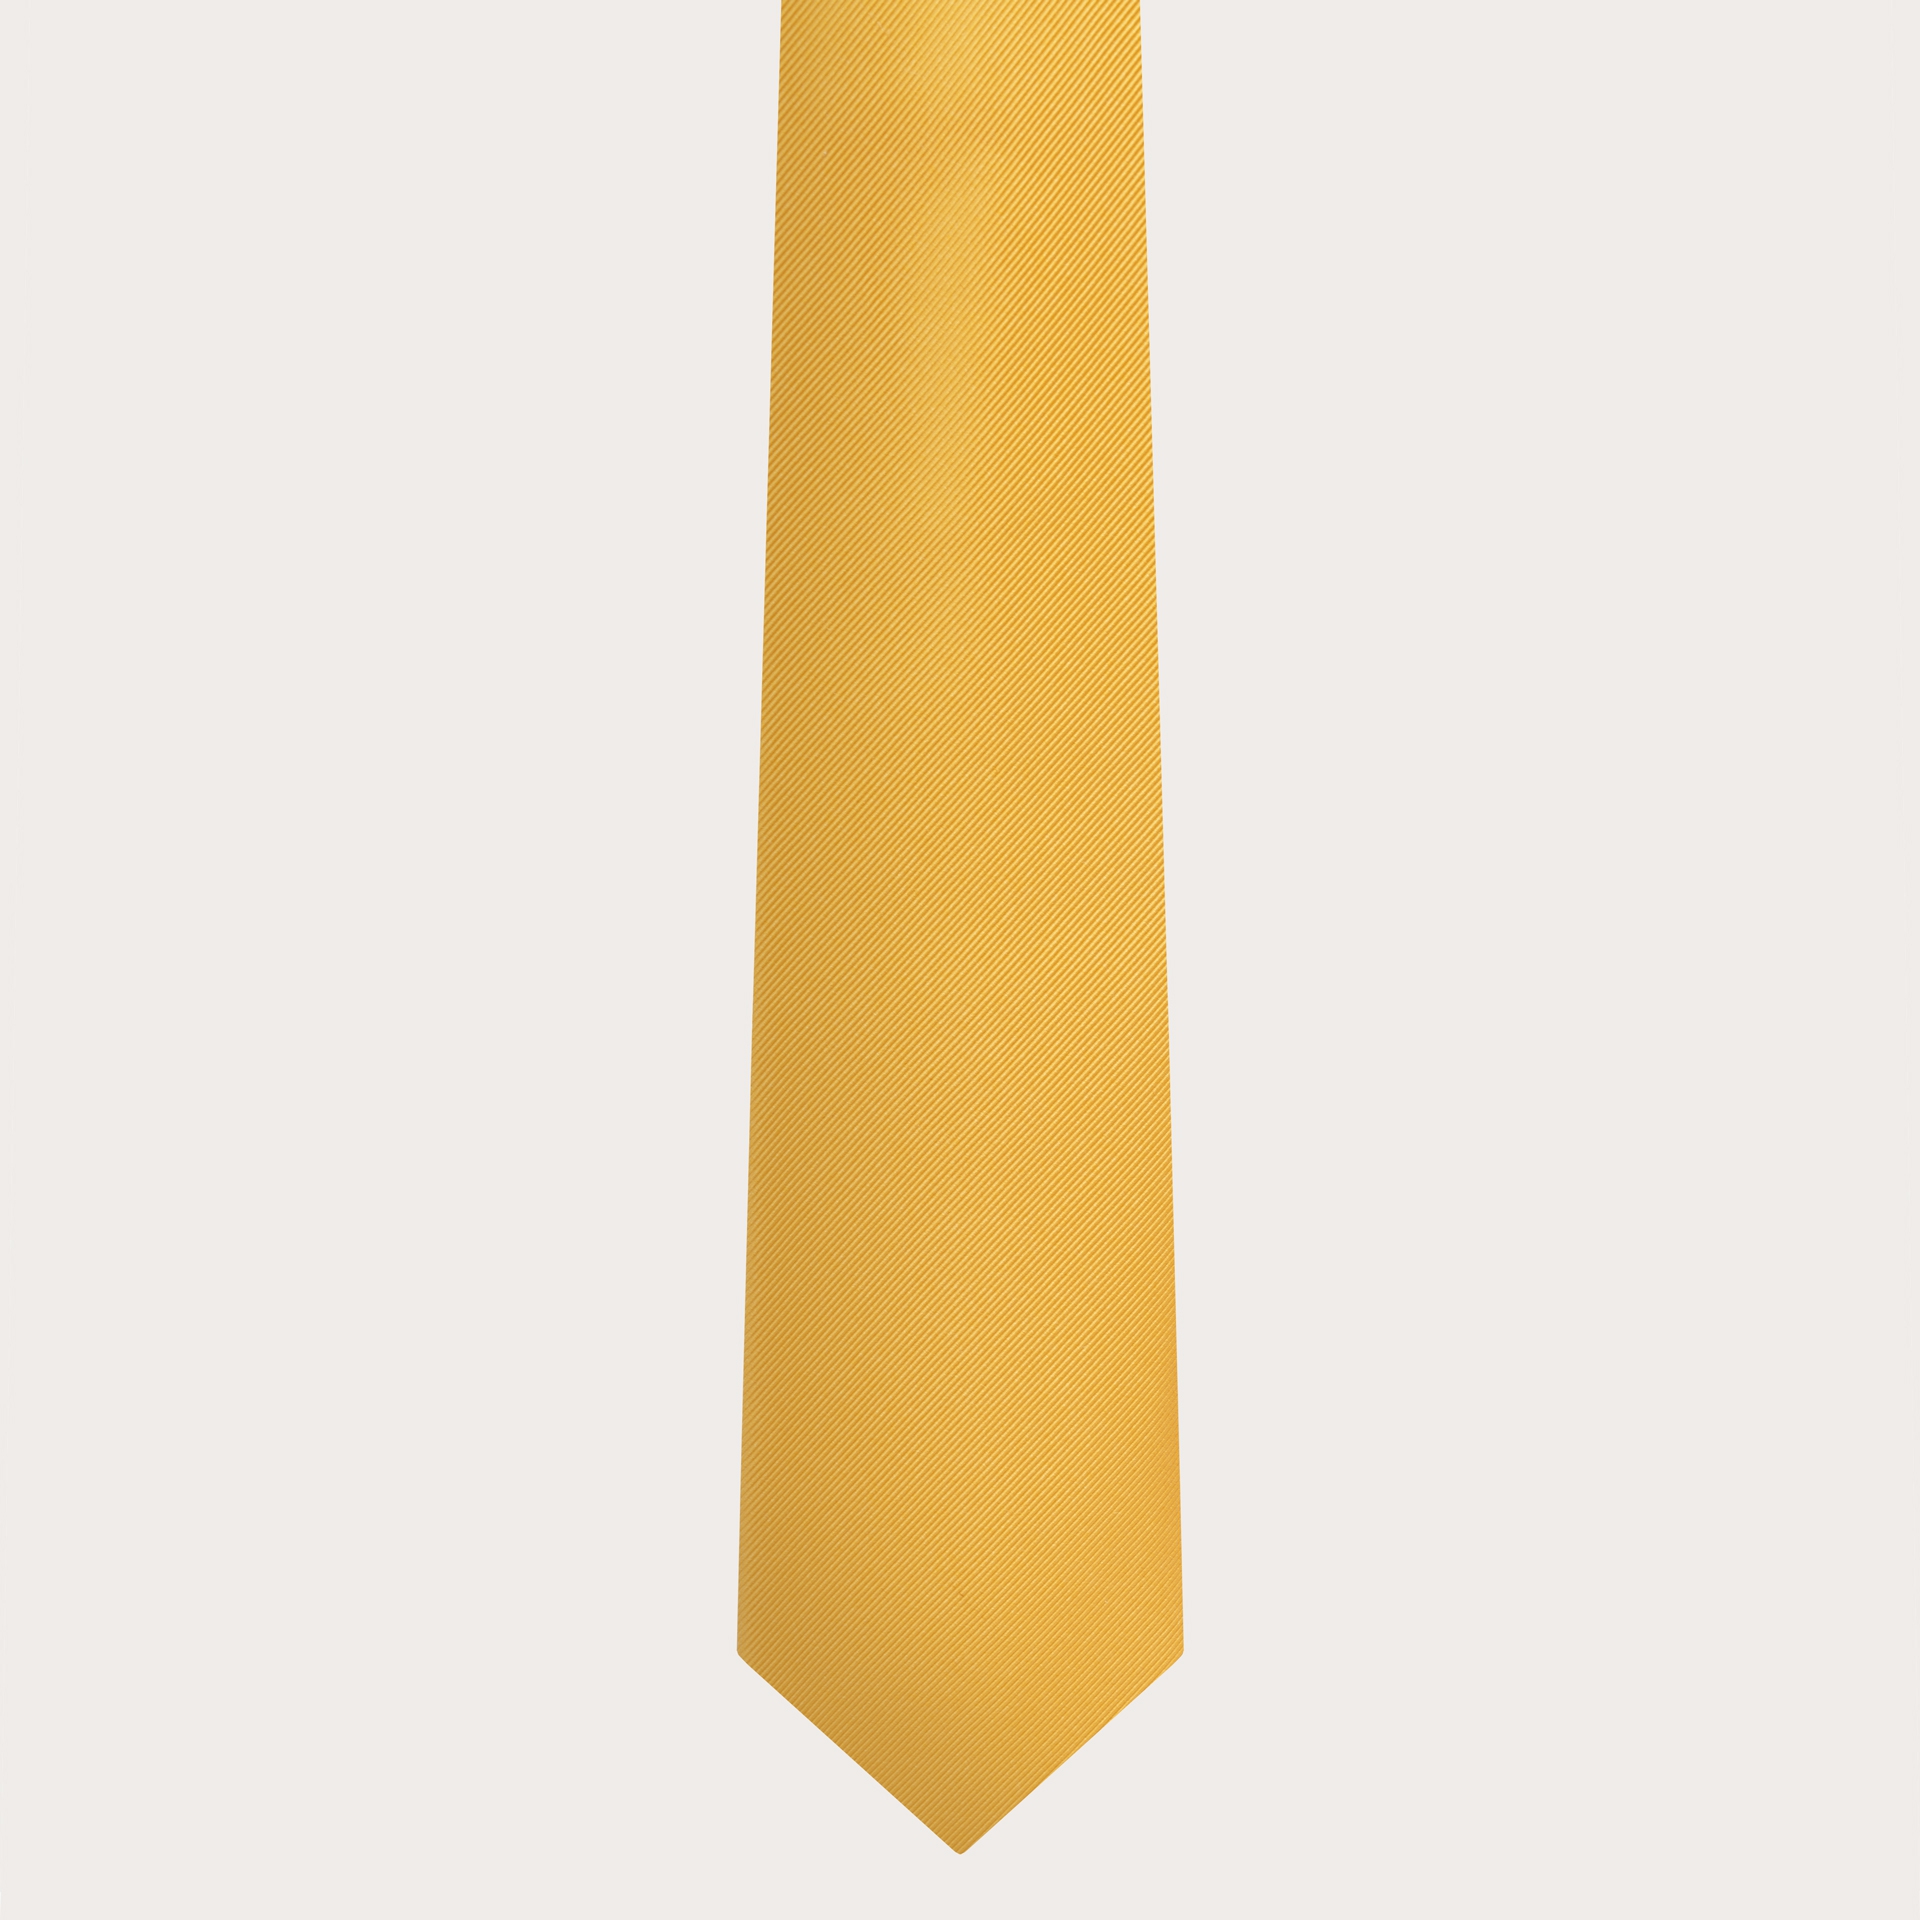 BRUCLE Cravatta gialla in seta jacquard